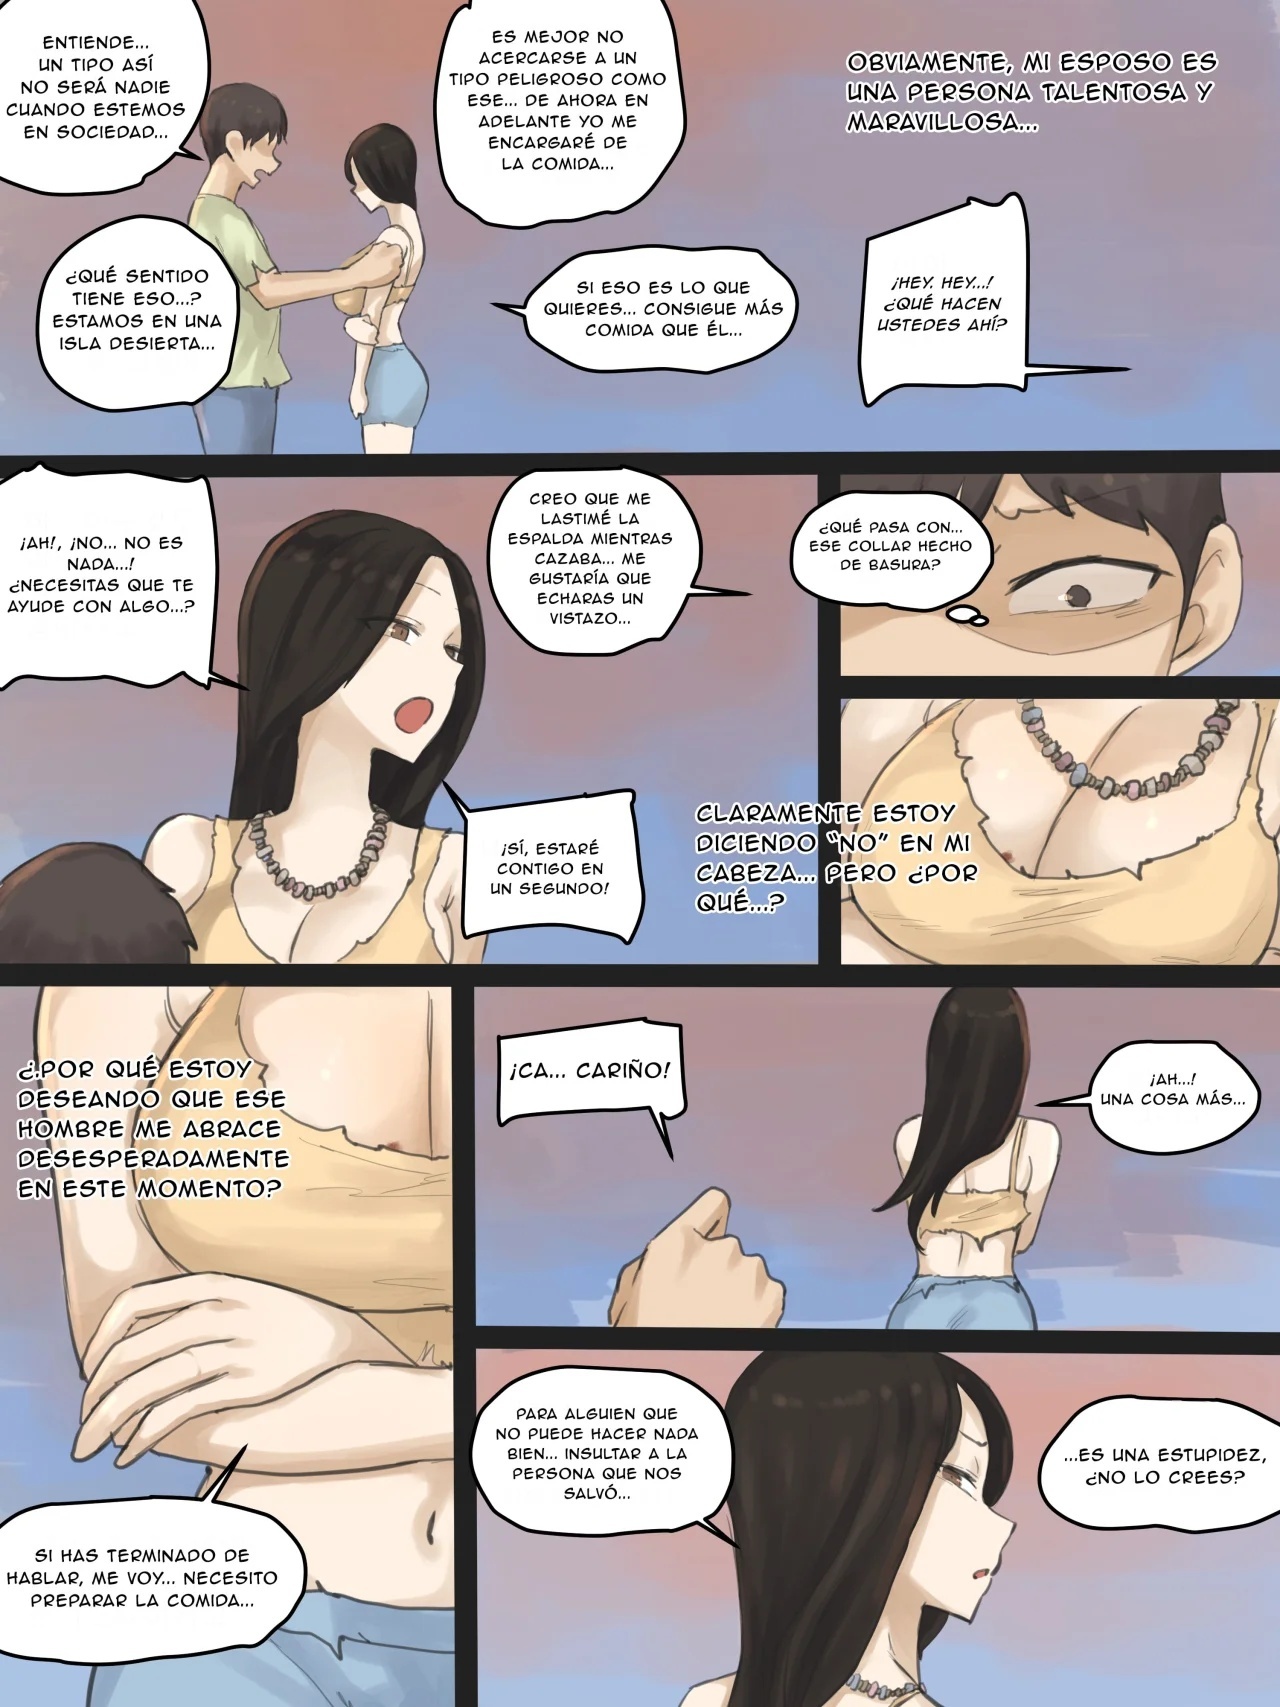 Honeymoon - Laliberte &#91;Short Comic&#93; (Traducido por Hguk) - 6